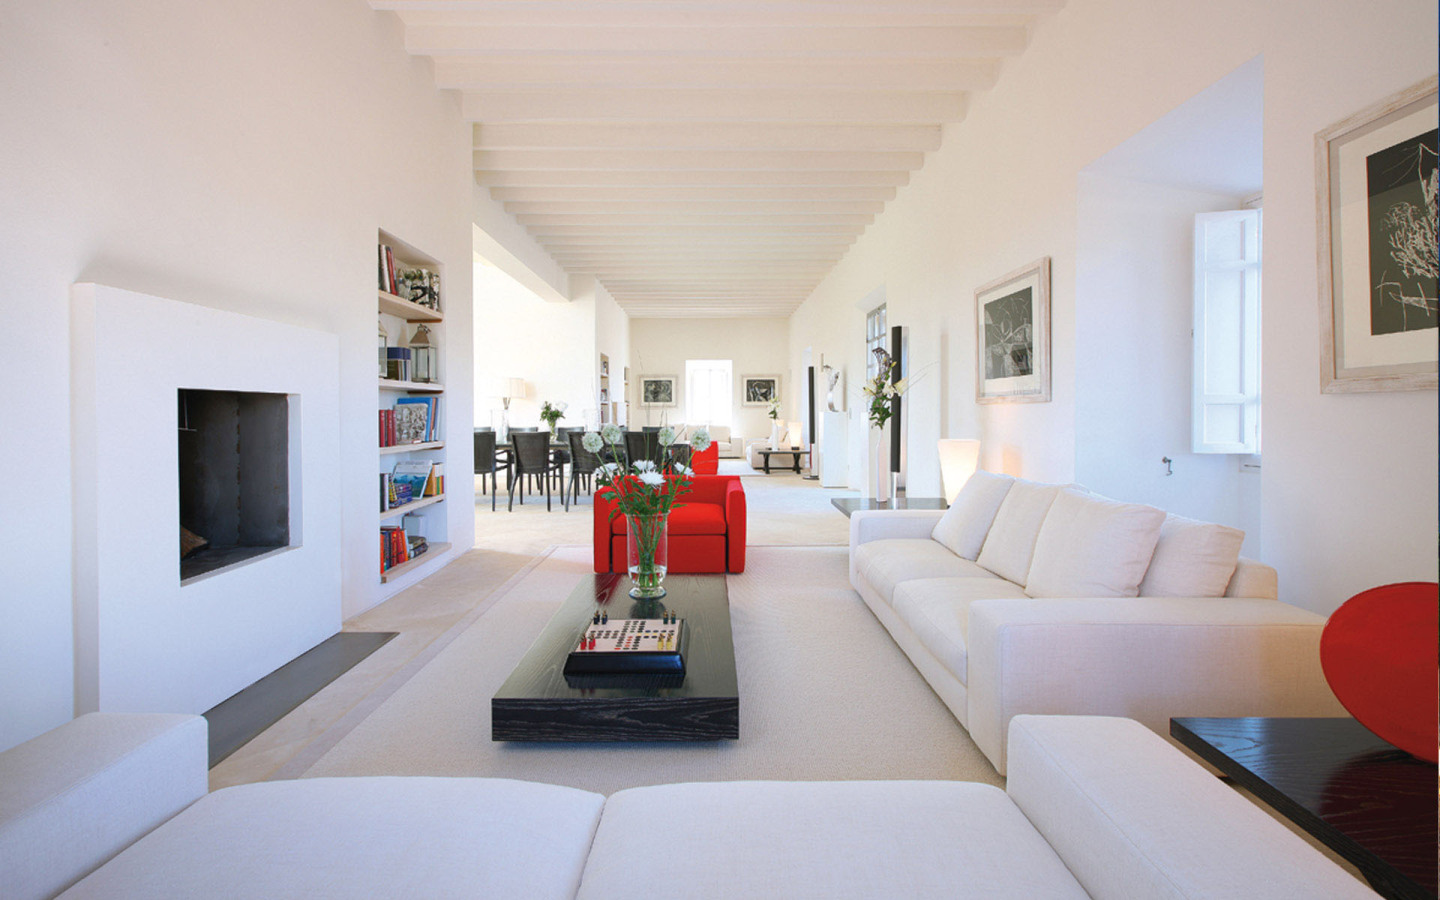 Castell De Manresa Estate interior living space